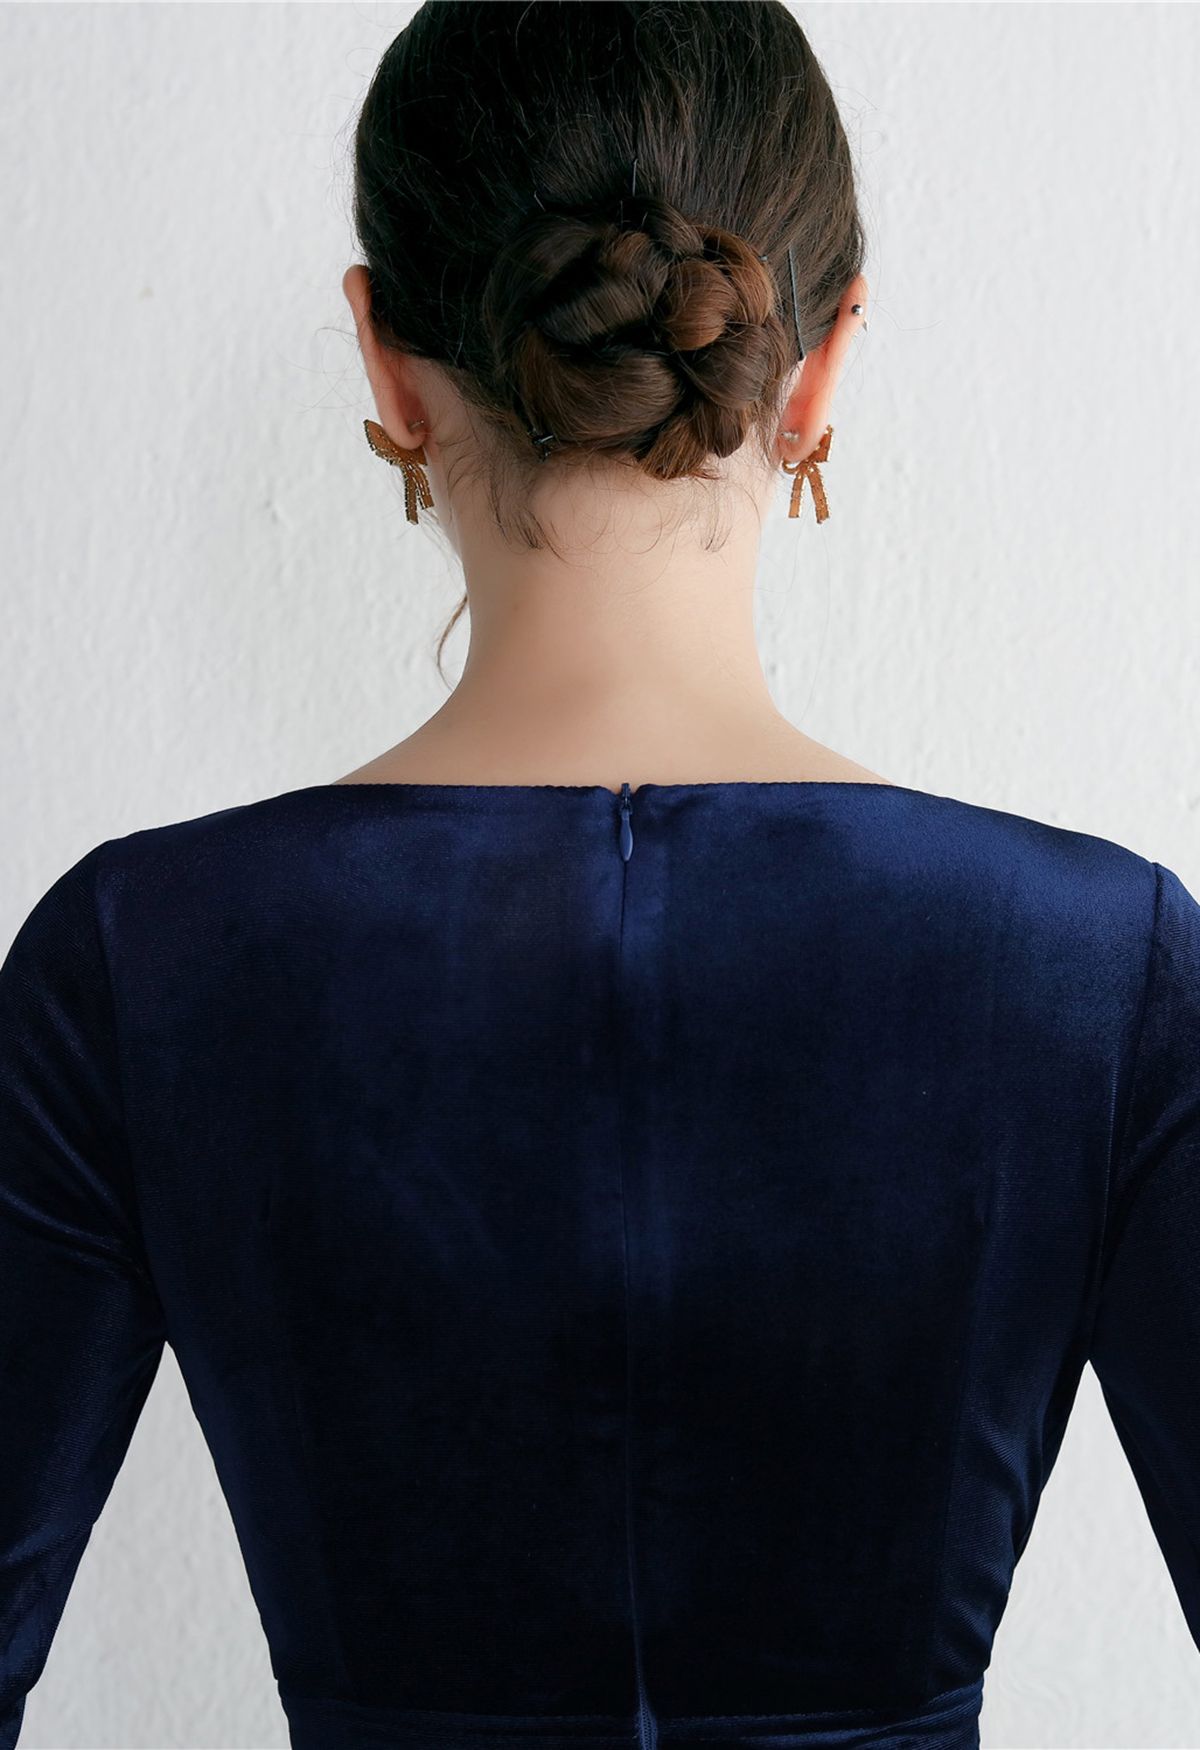 Vestido de cóctel de lentejuelas con cuello en V empalmado de terciopelo en azul marino